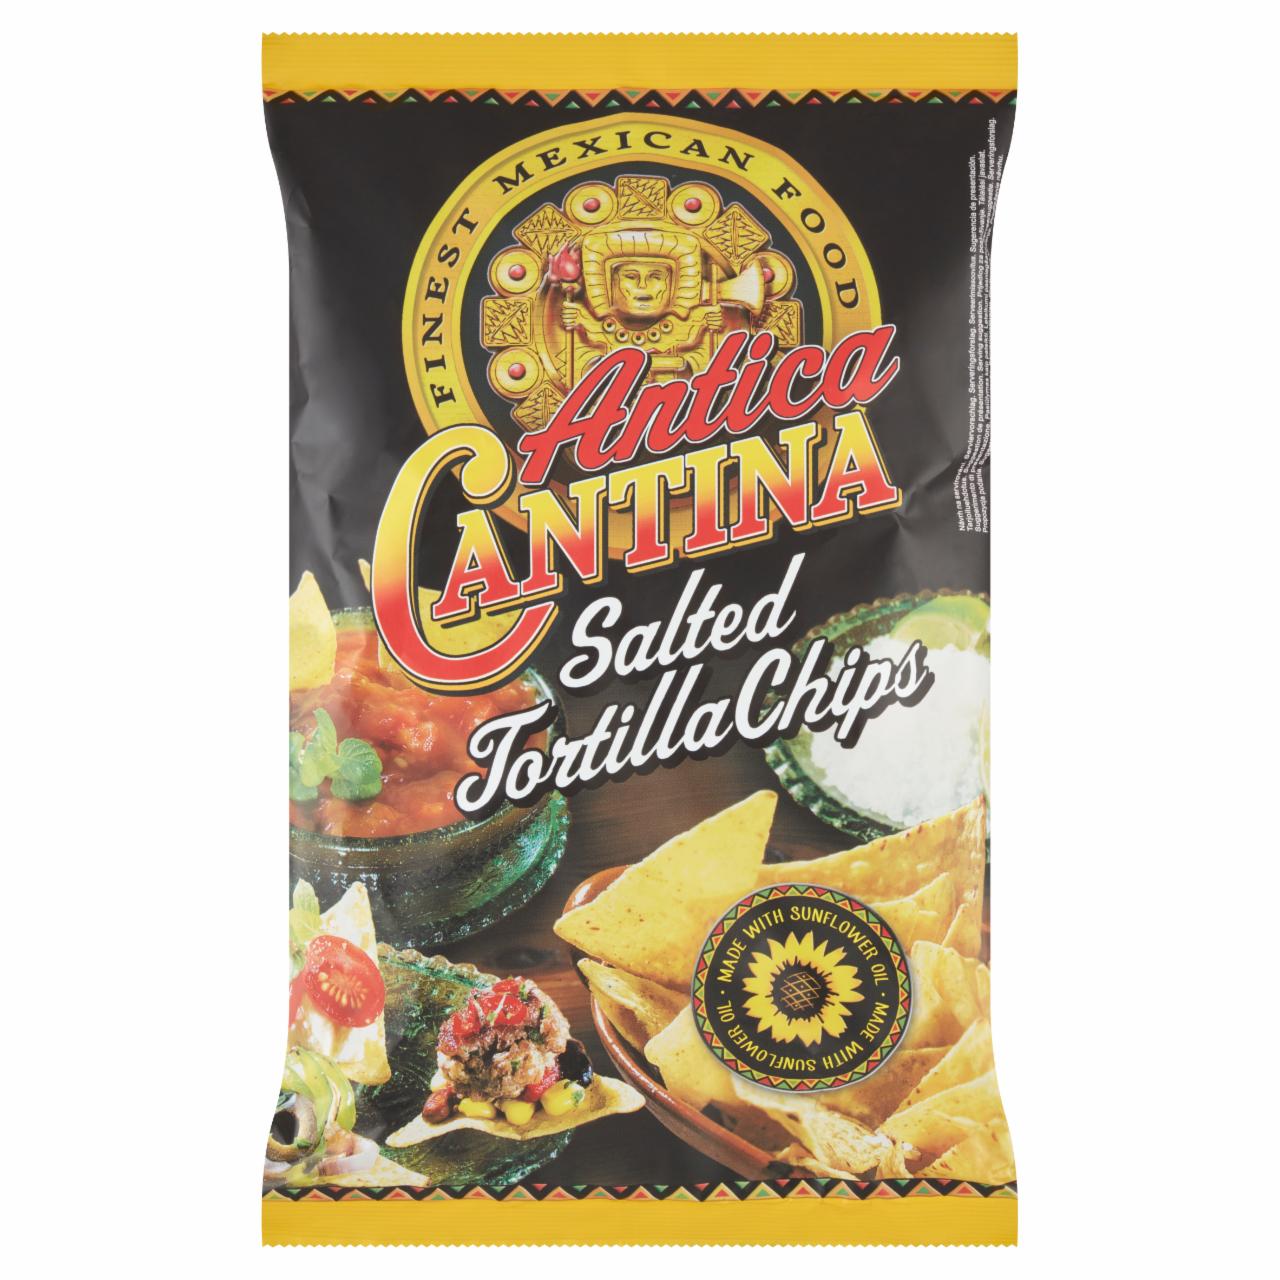 Képek - Antica Cantina sós kukorica snacks 200 g